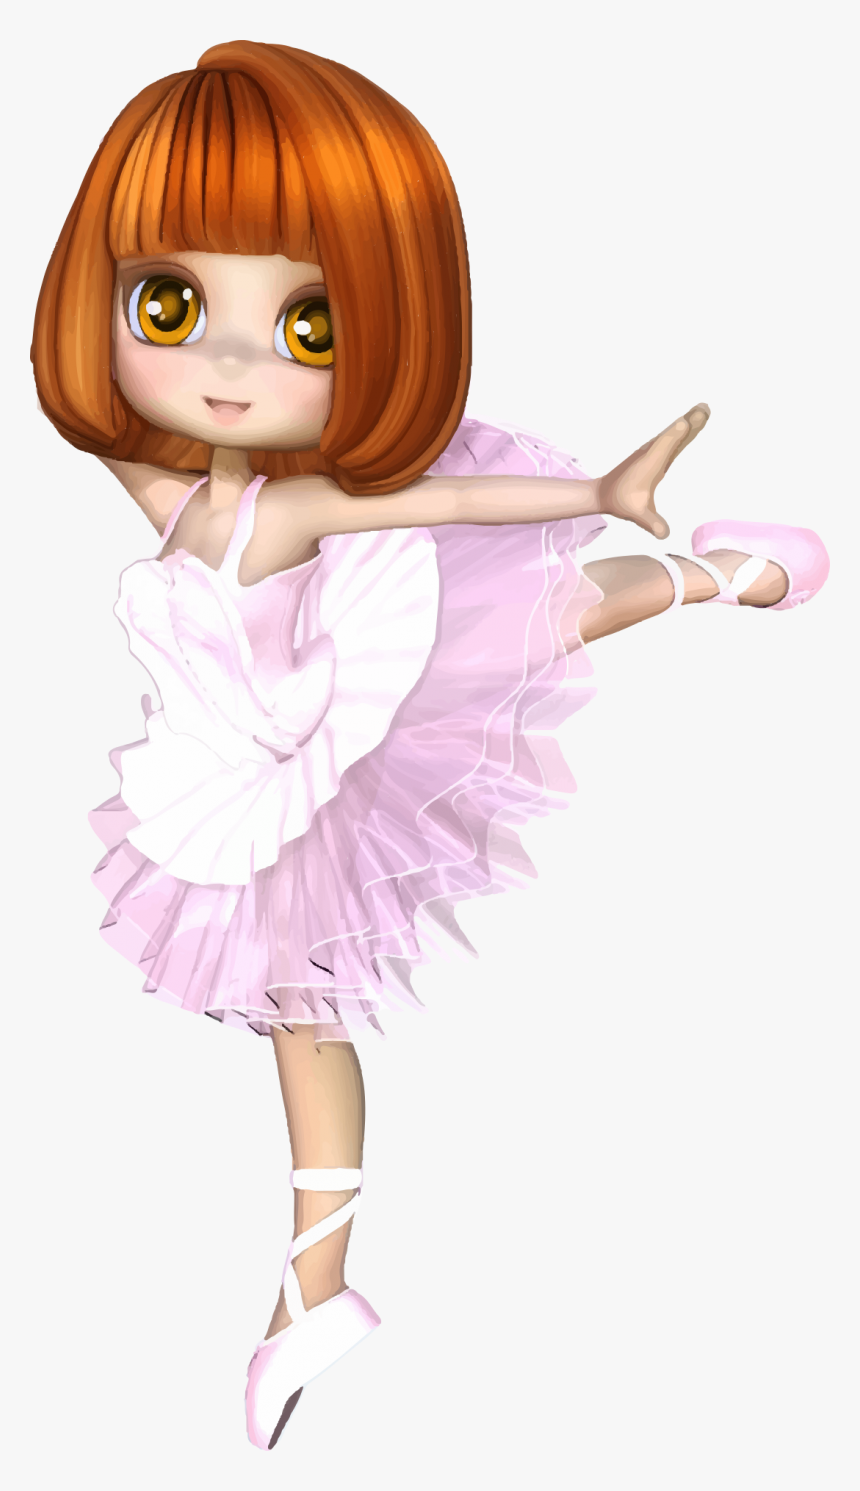 Dancing Anime Girl Png Image - Cartoon Girl Dancing Png, Transparent Png, Free Download